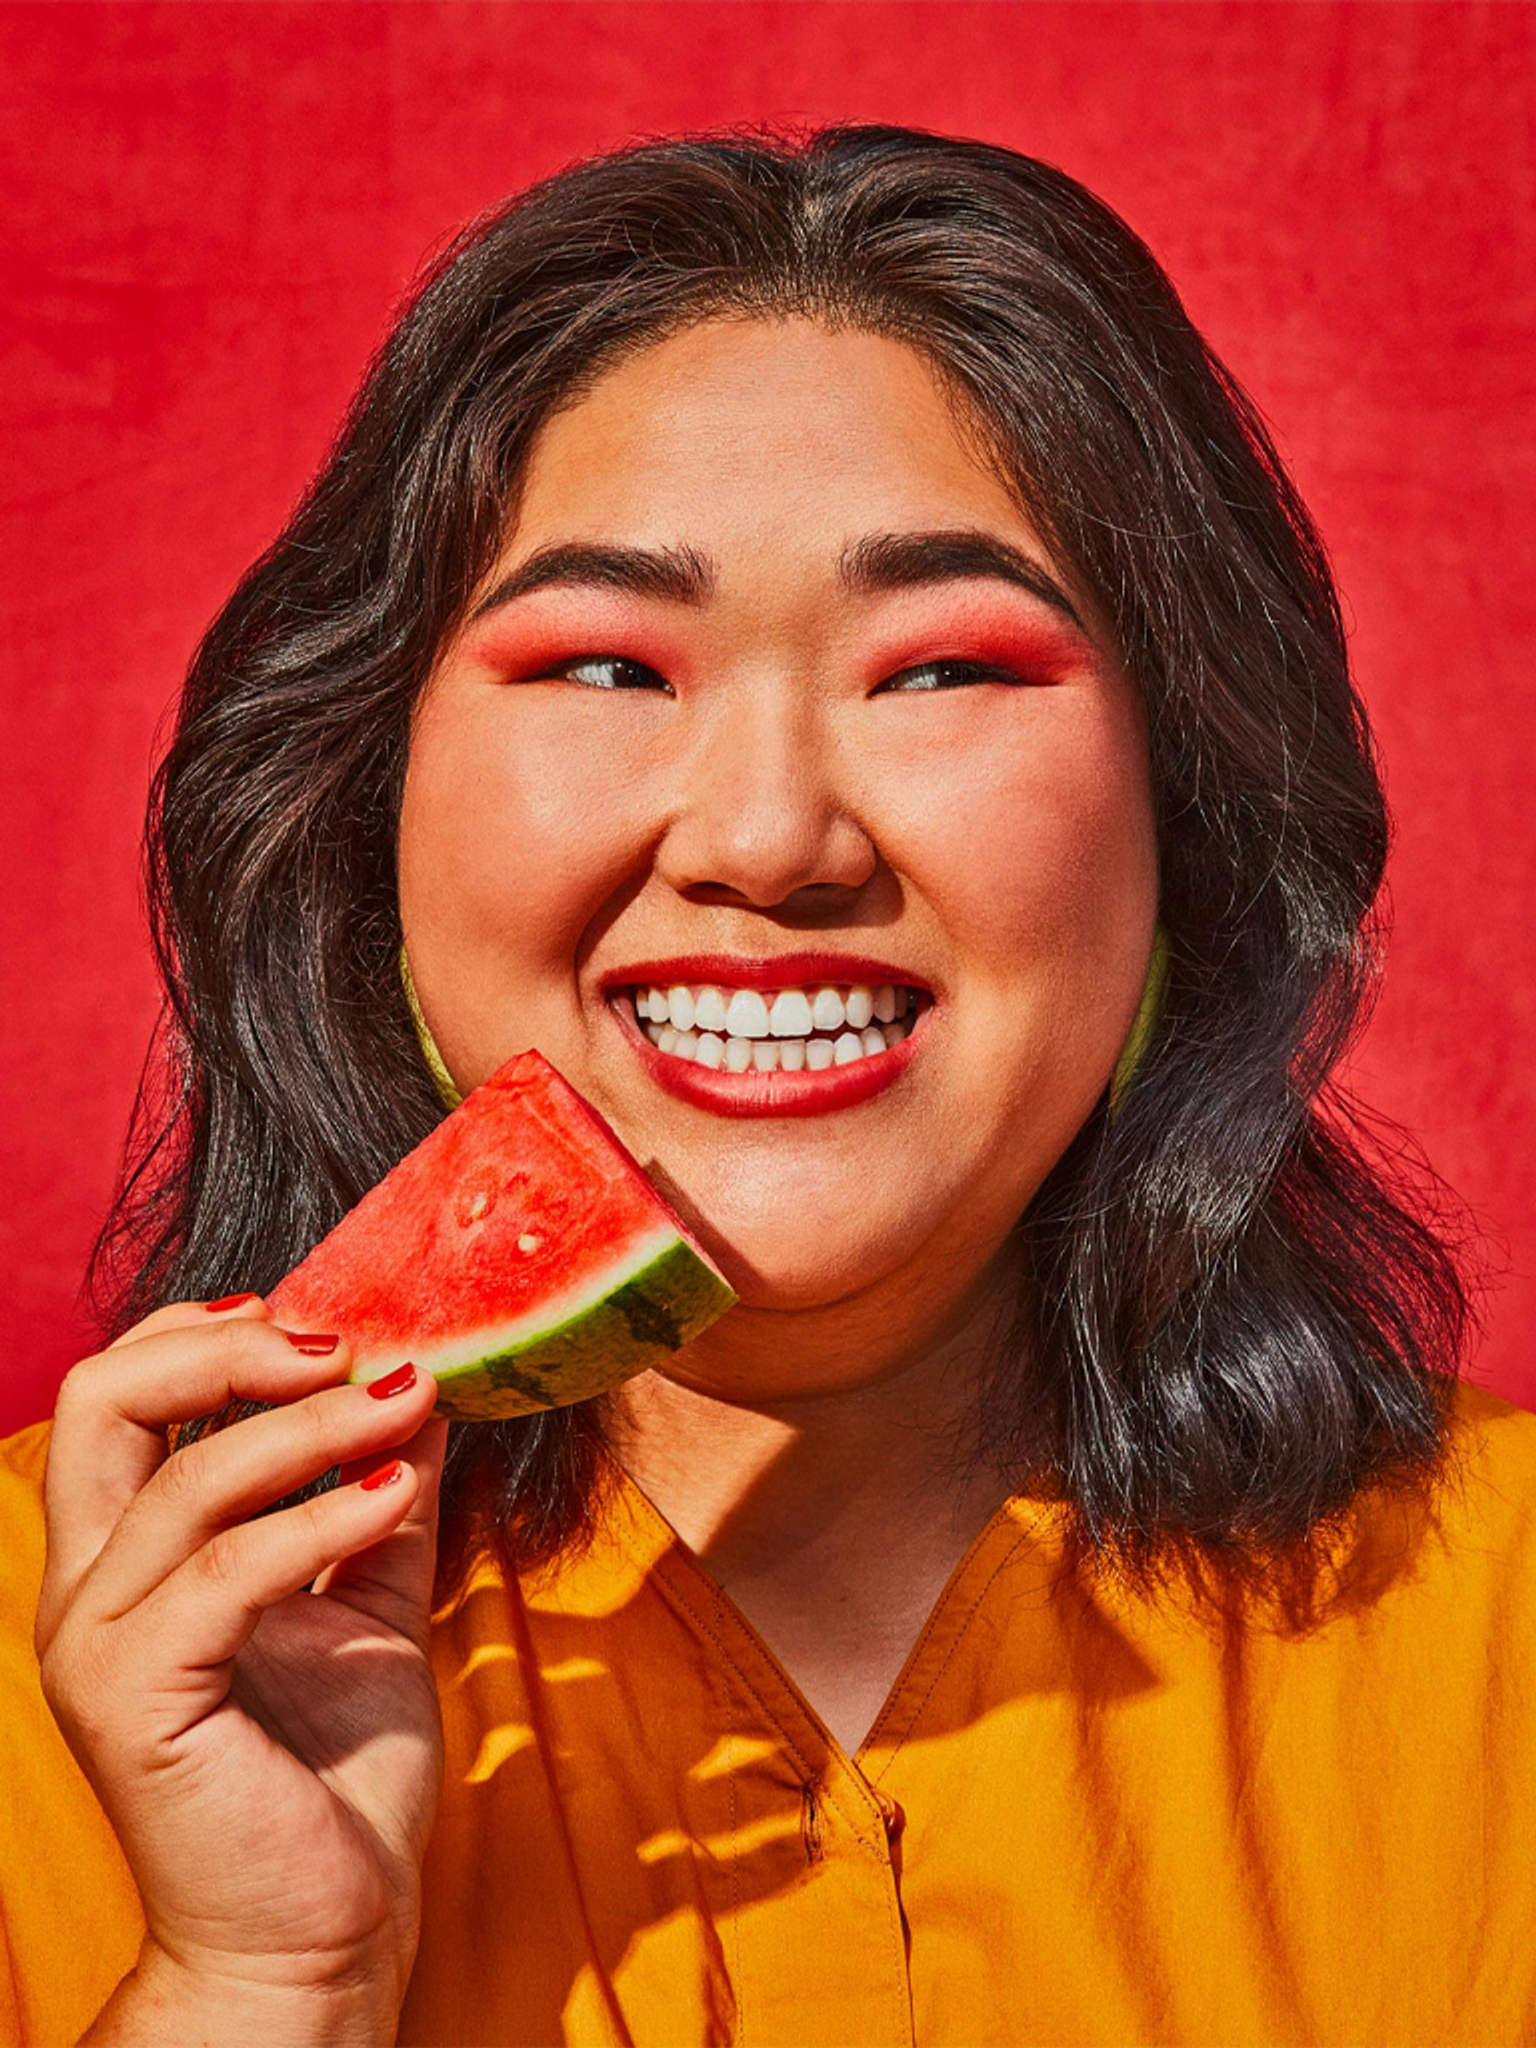 A joyful woman biting a watermelon slice against a red backdrop.